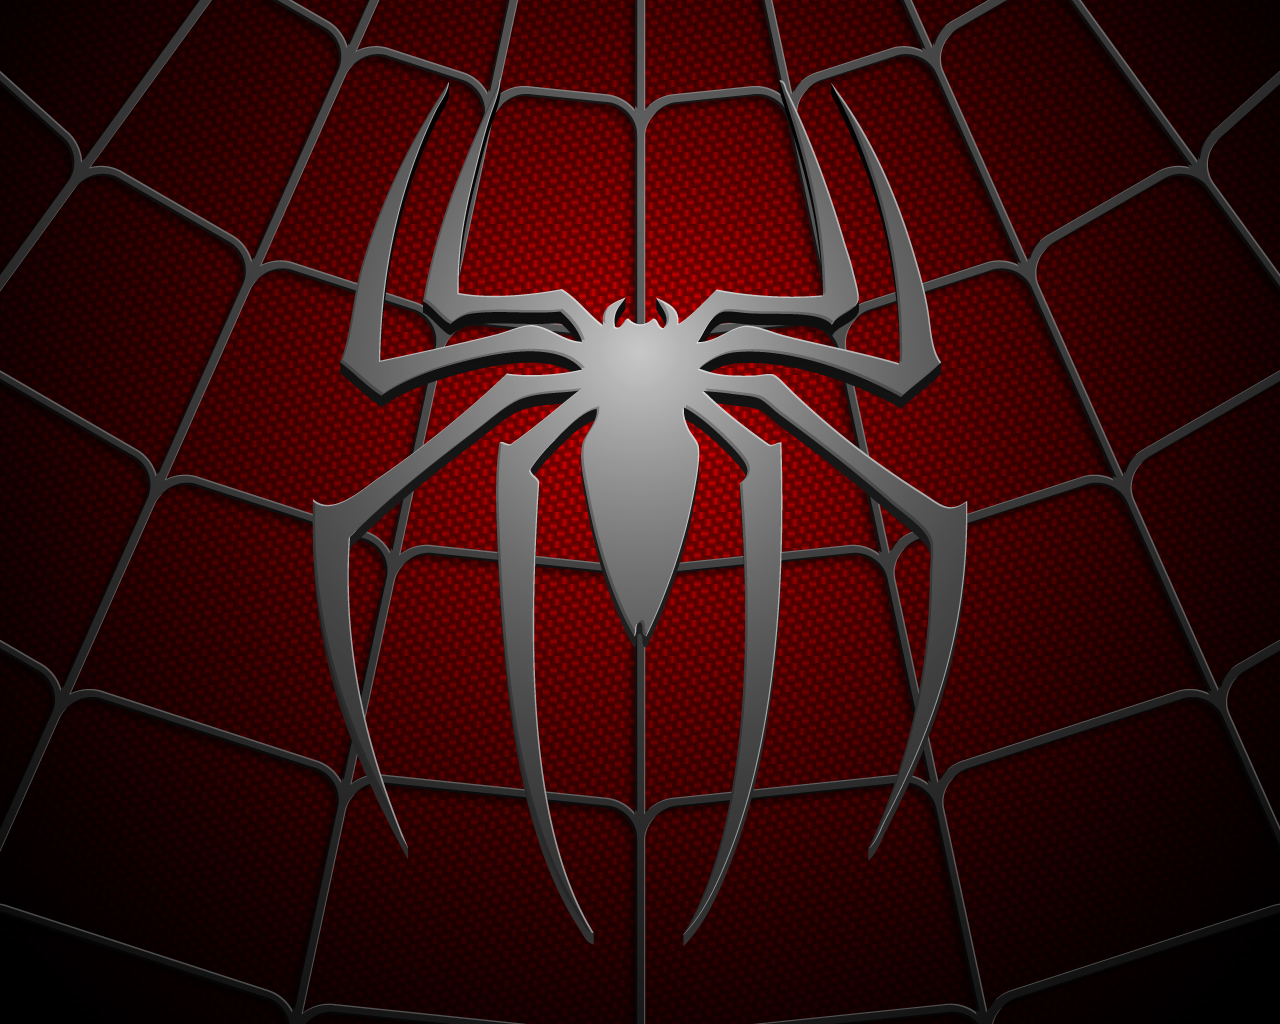 comics, spider man, spider man logo wallpaper for mobile